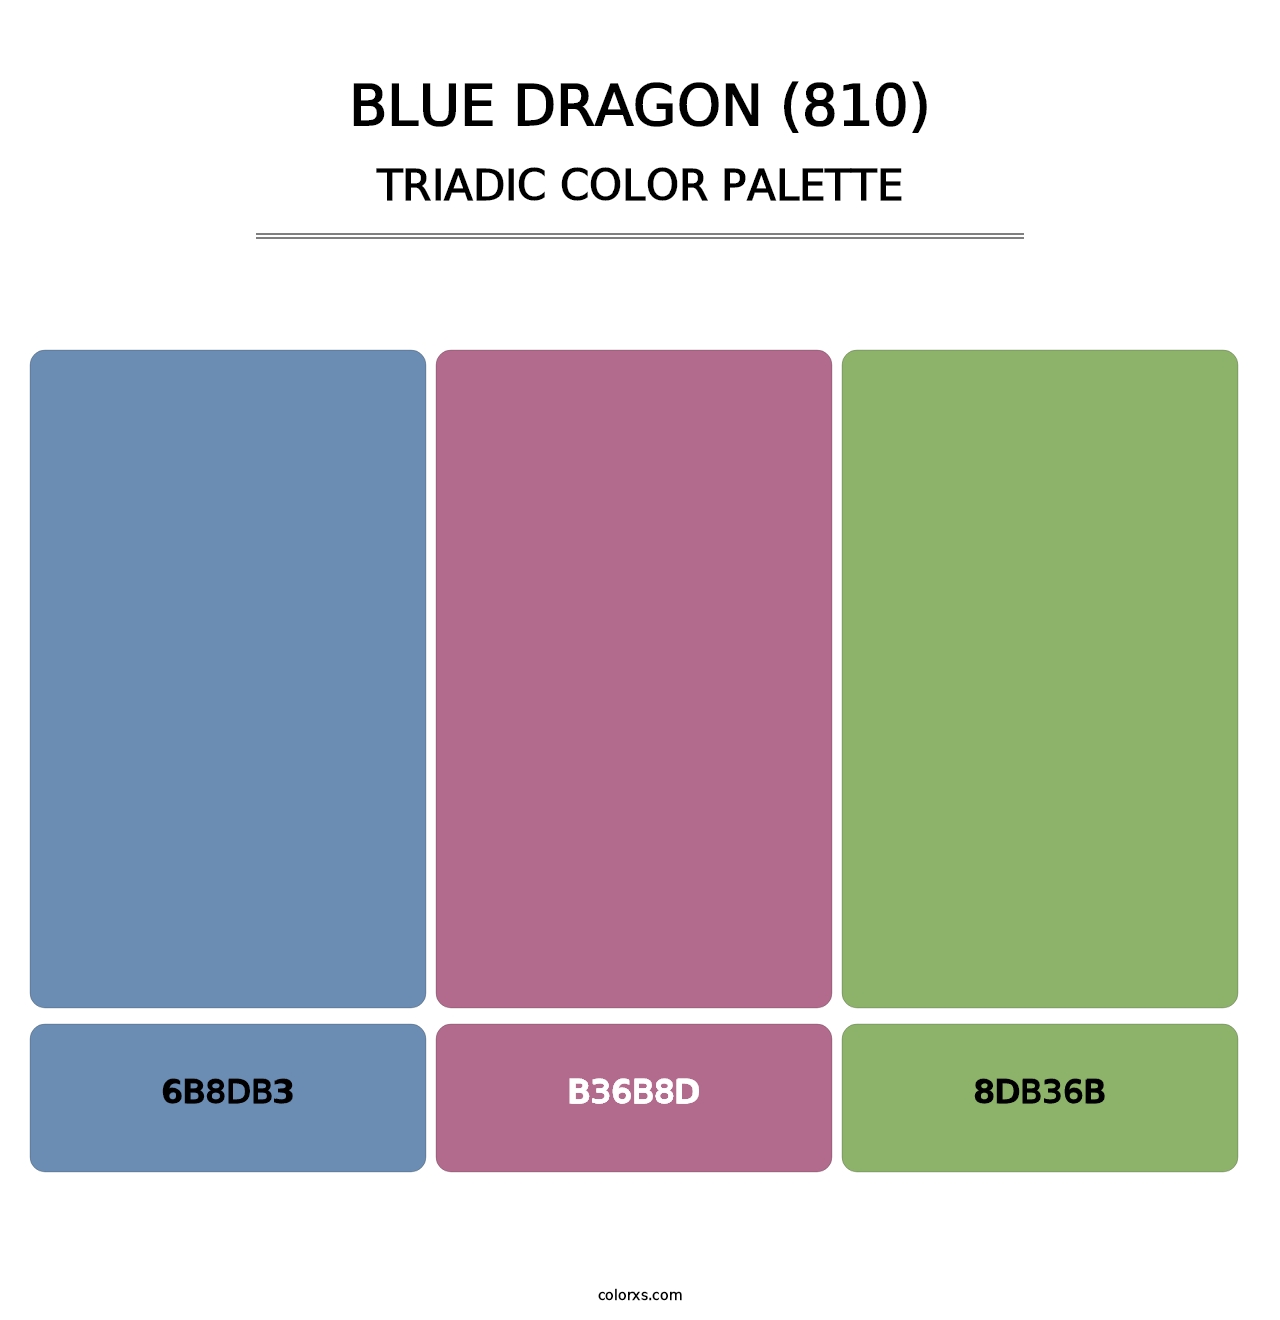 Blue Dragon (810) - Triadic Color Palette